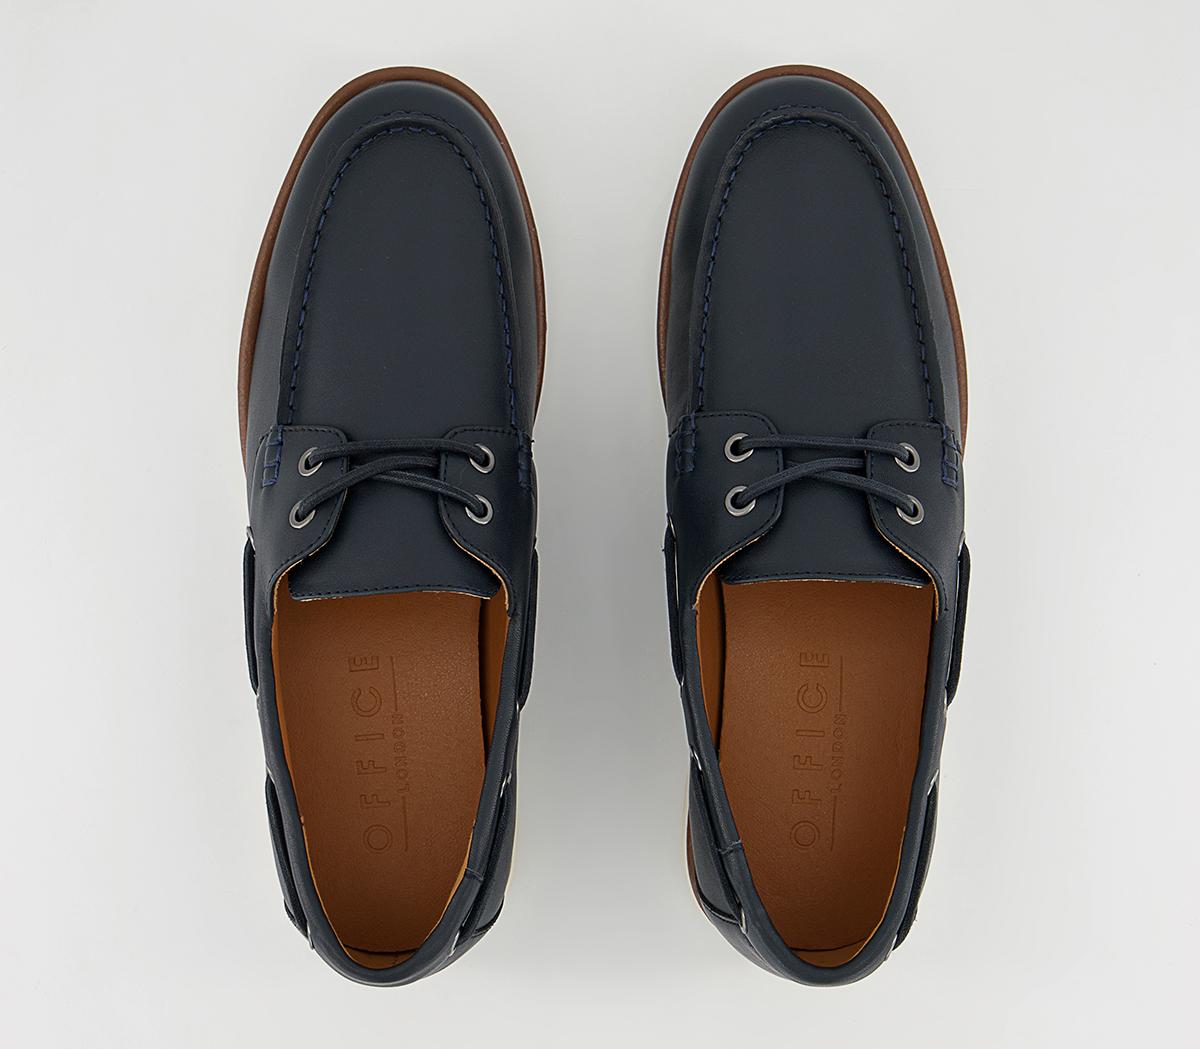 OFFICE Carlow Premium Boat Shoes Navy Leather - Men’s Smart Shoes